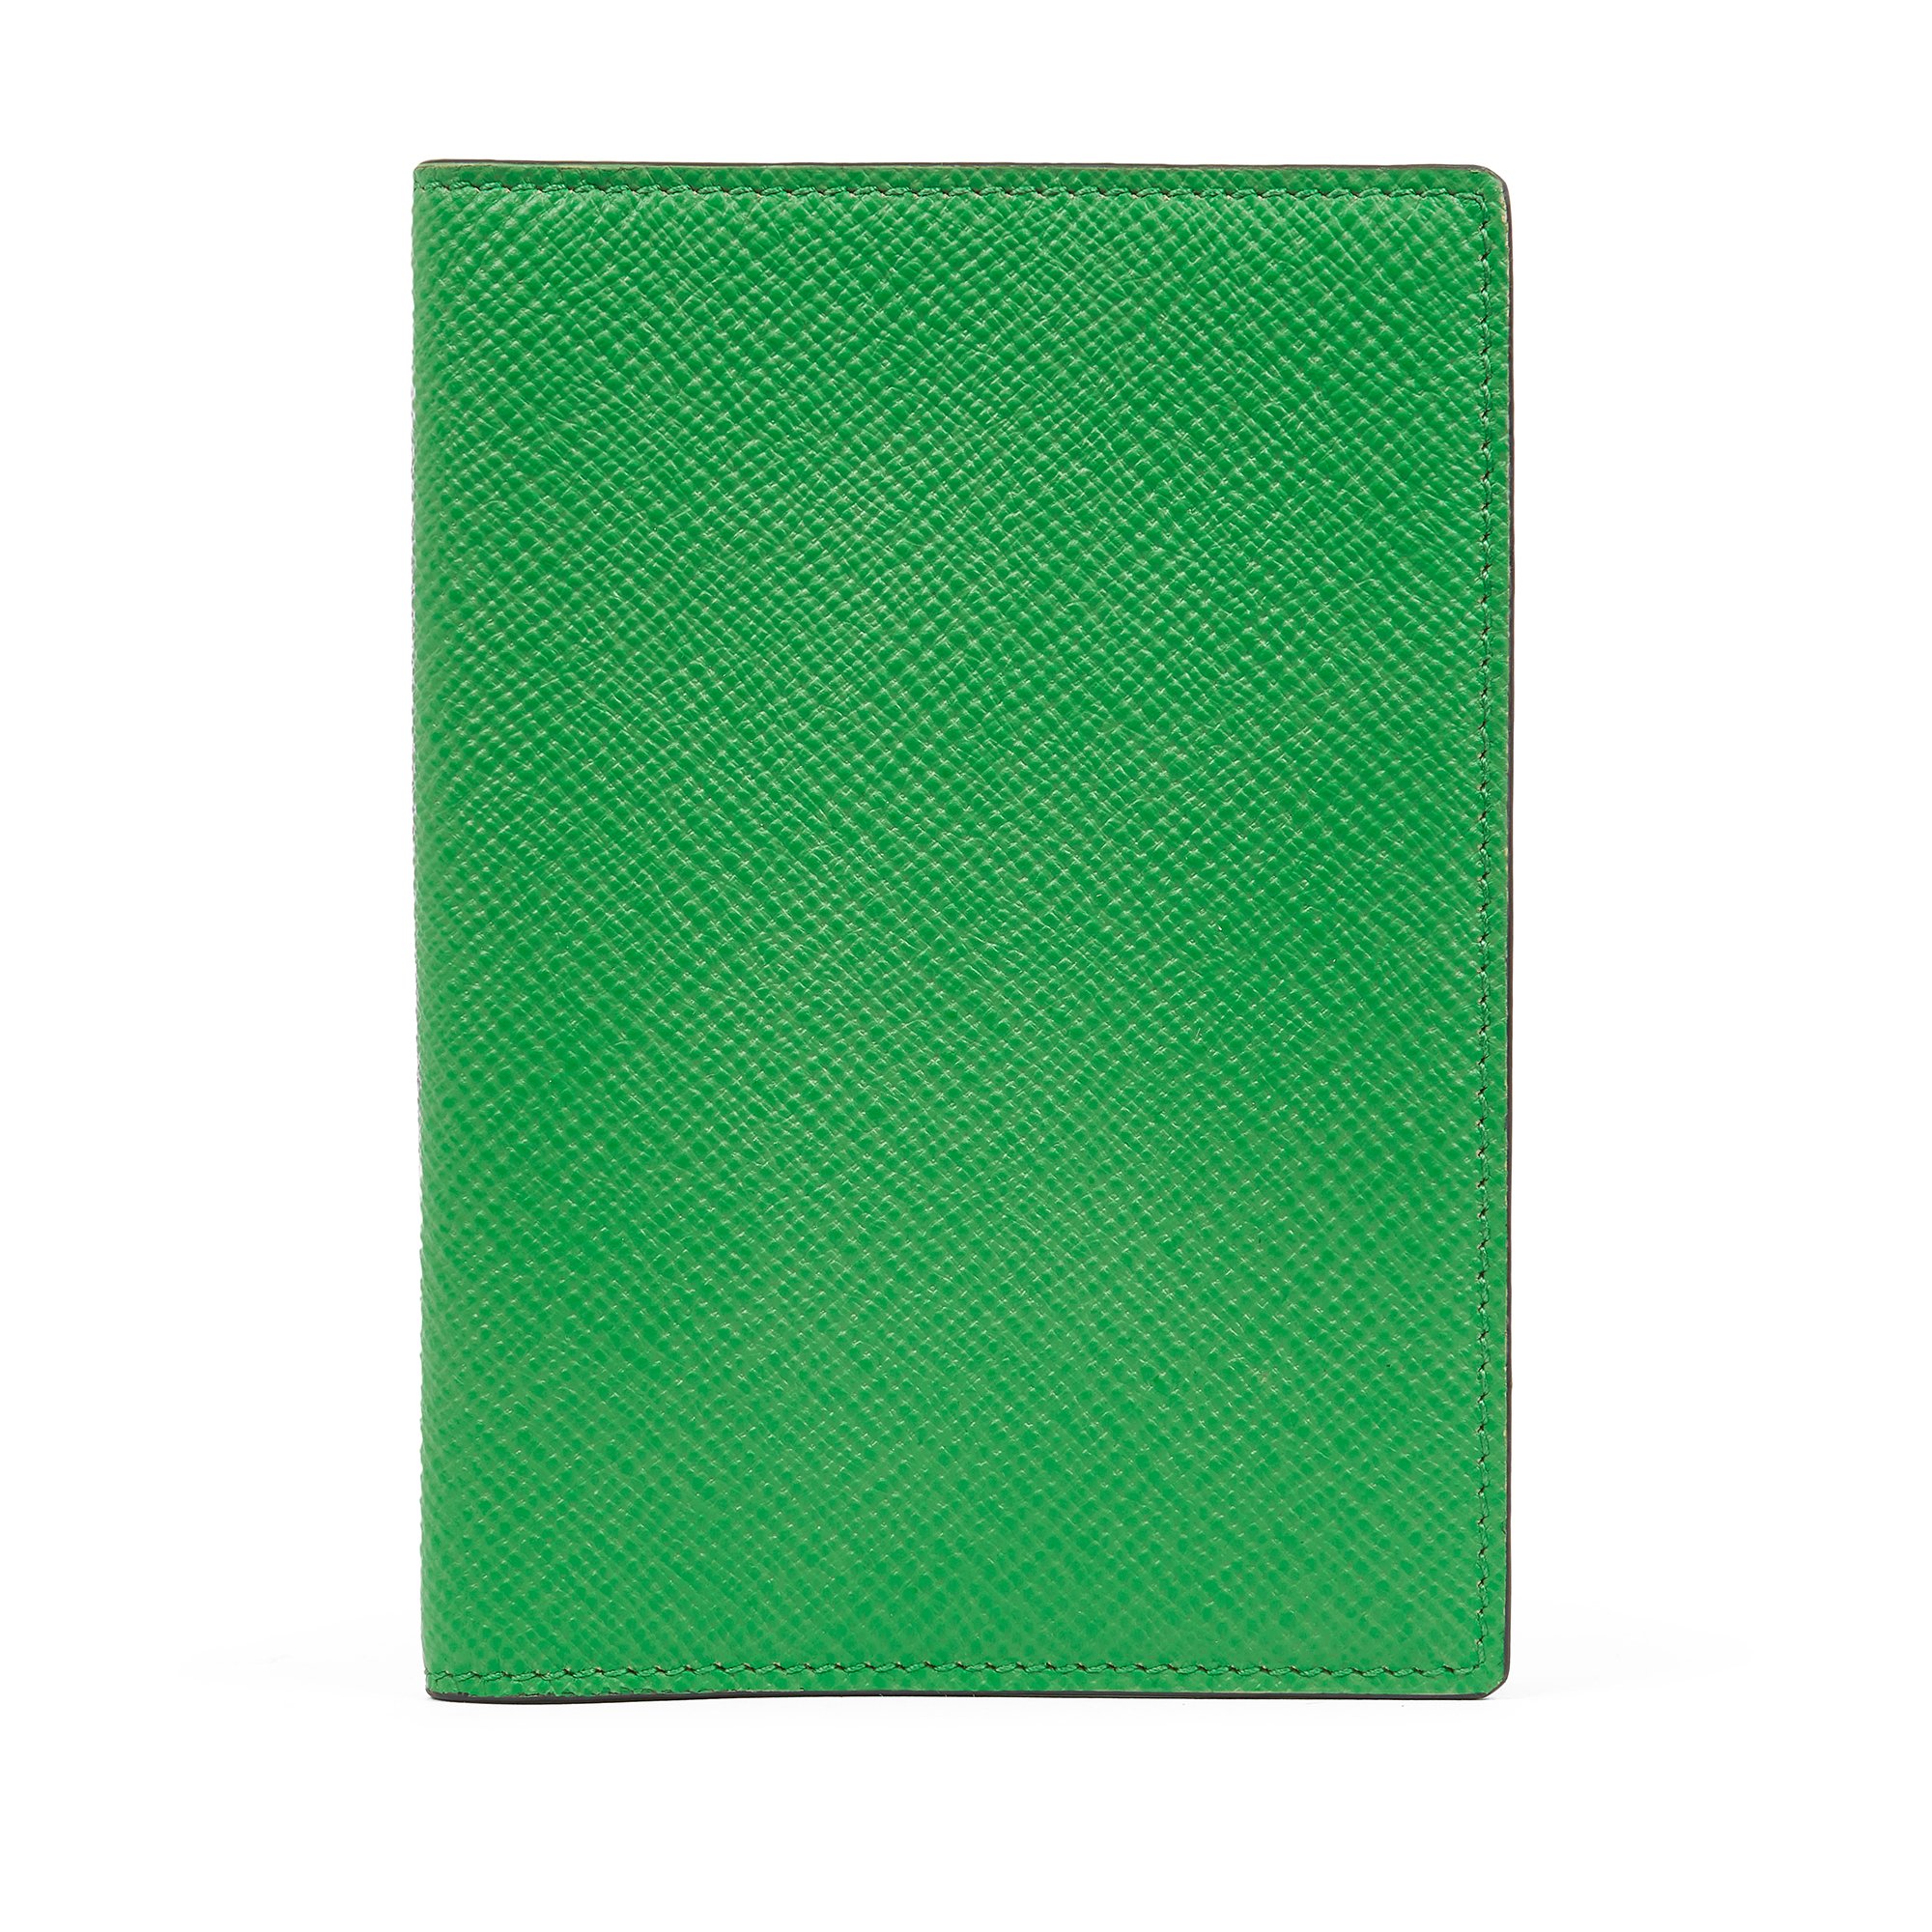 Smythson Passport Cover In Panama In Bright Emerald